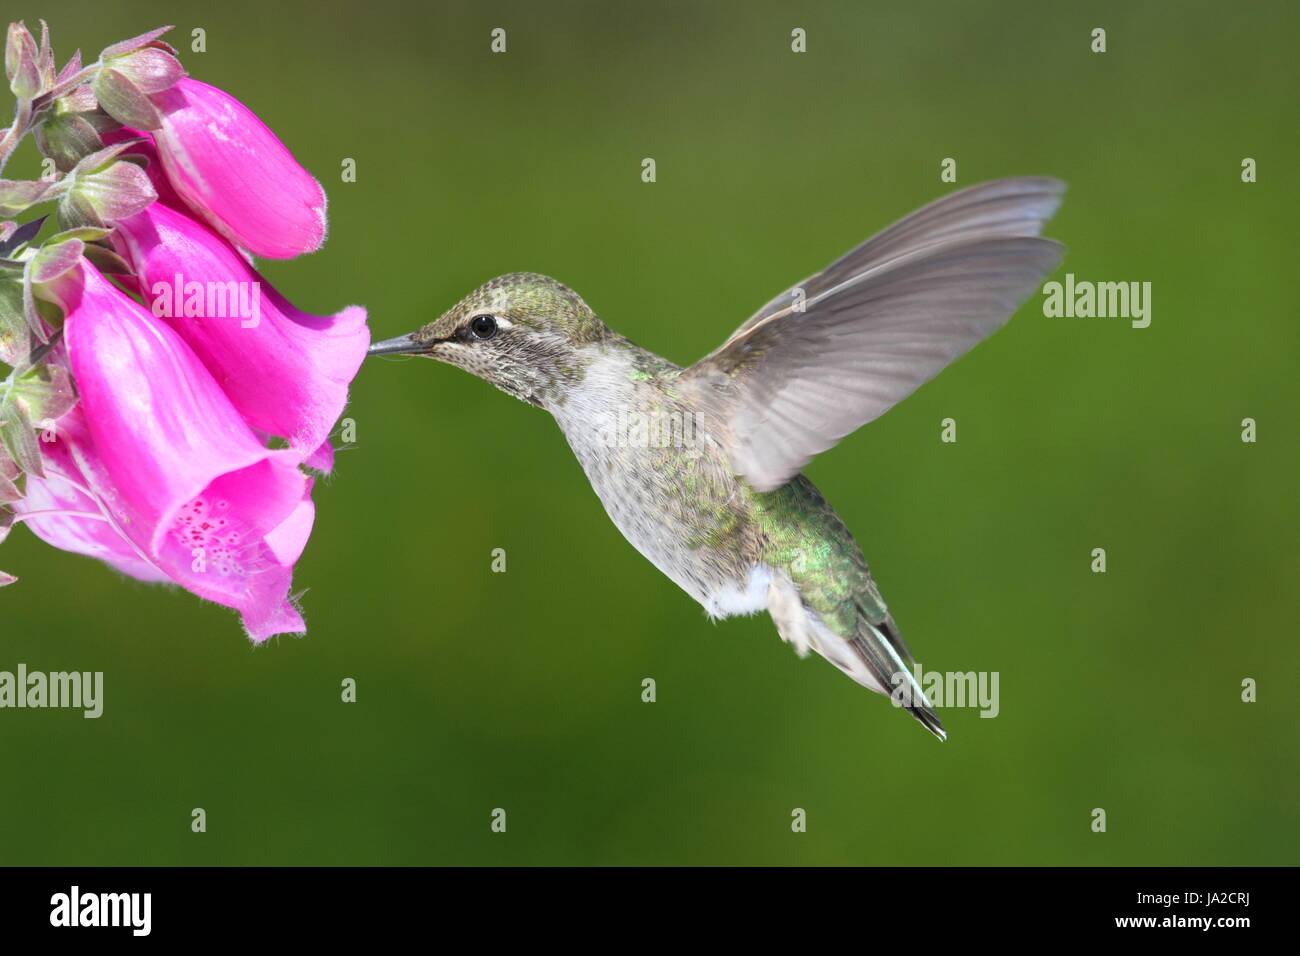 Flower, pianta selvatica, uccelli selvatici, Hummingbird, prato verde natura animale, Foto Stock